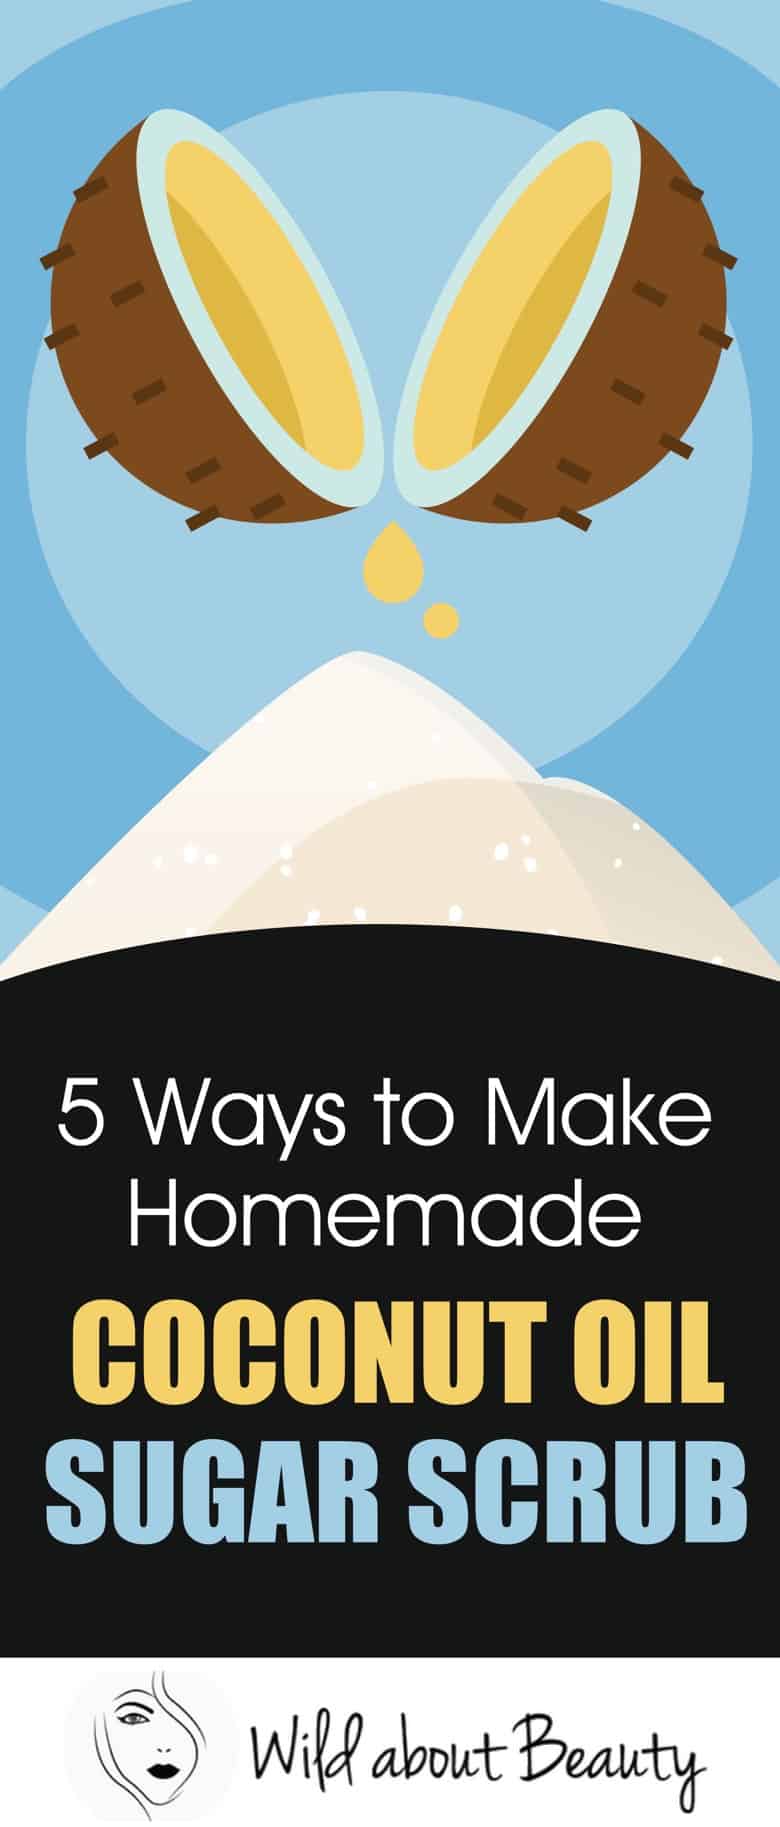 5 Ways to Make Homemade Coconut Oil Sugar Scrub